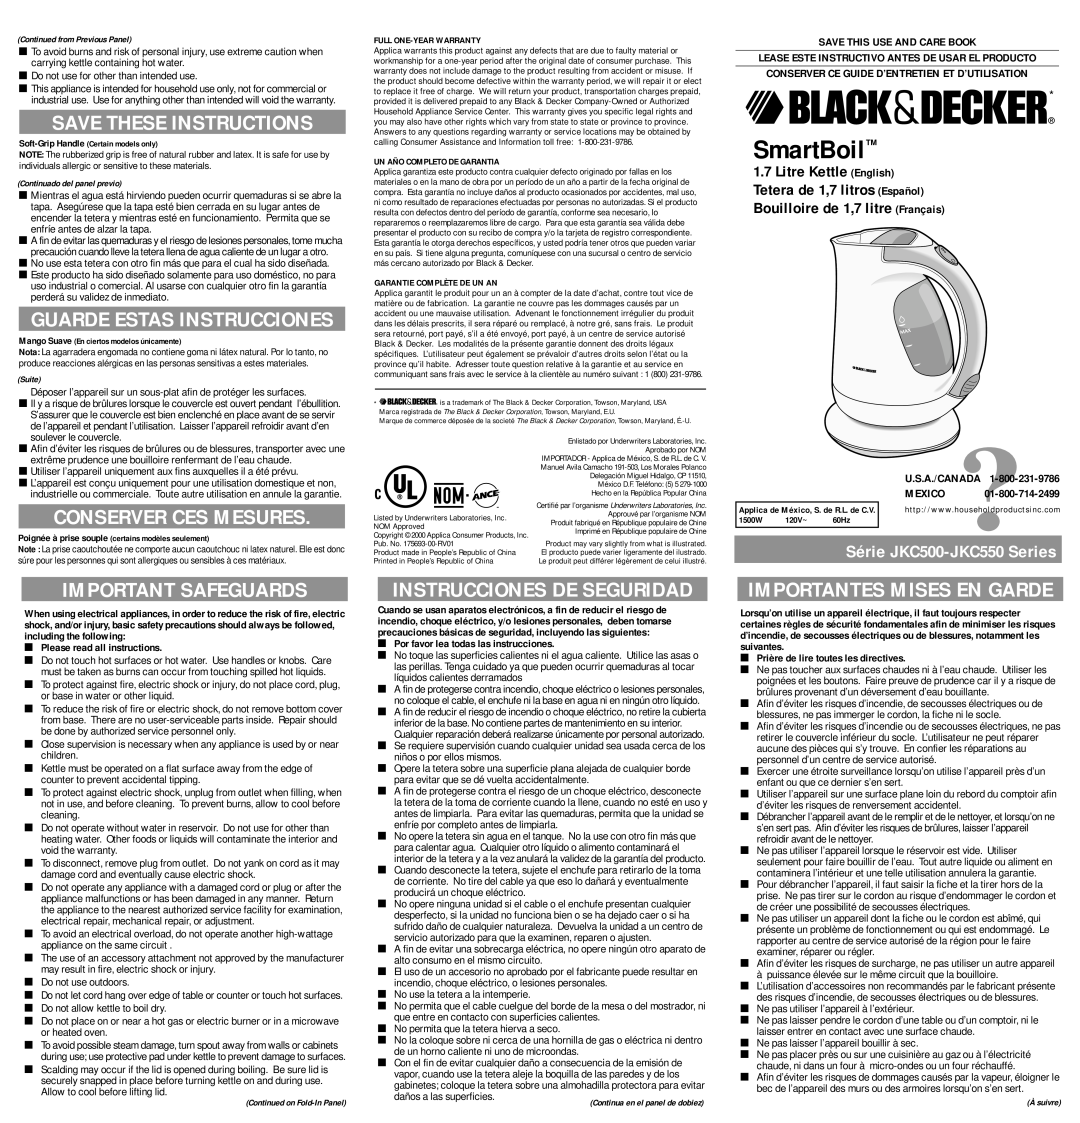 Black & Decker JKC500 user service Save These Instructions, Conserver Ces Mesures, Important Safeguards, SmartBoil, Mexico 